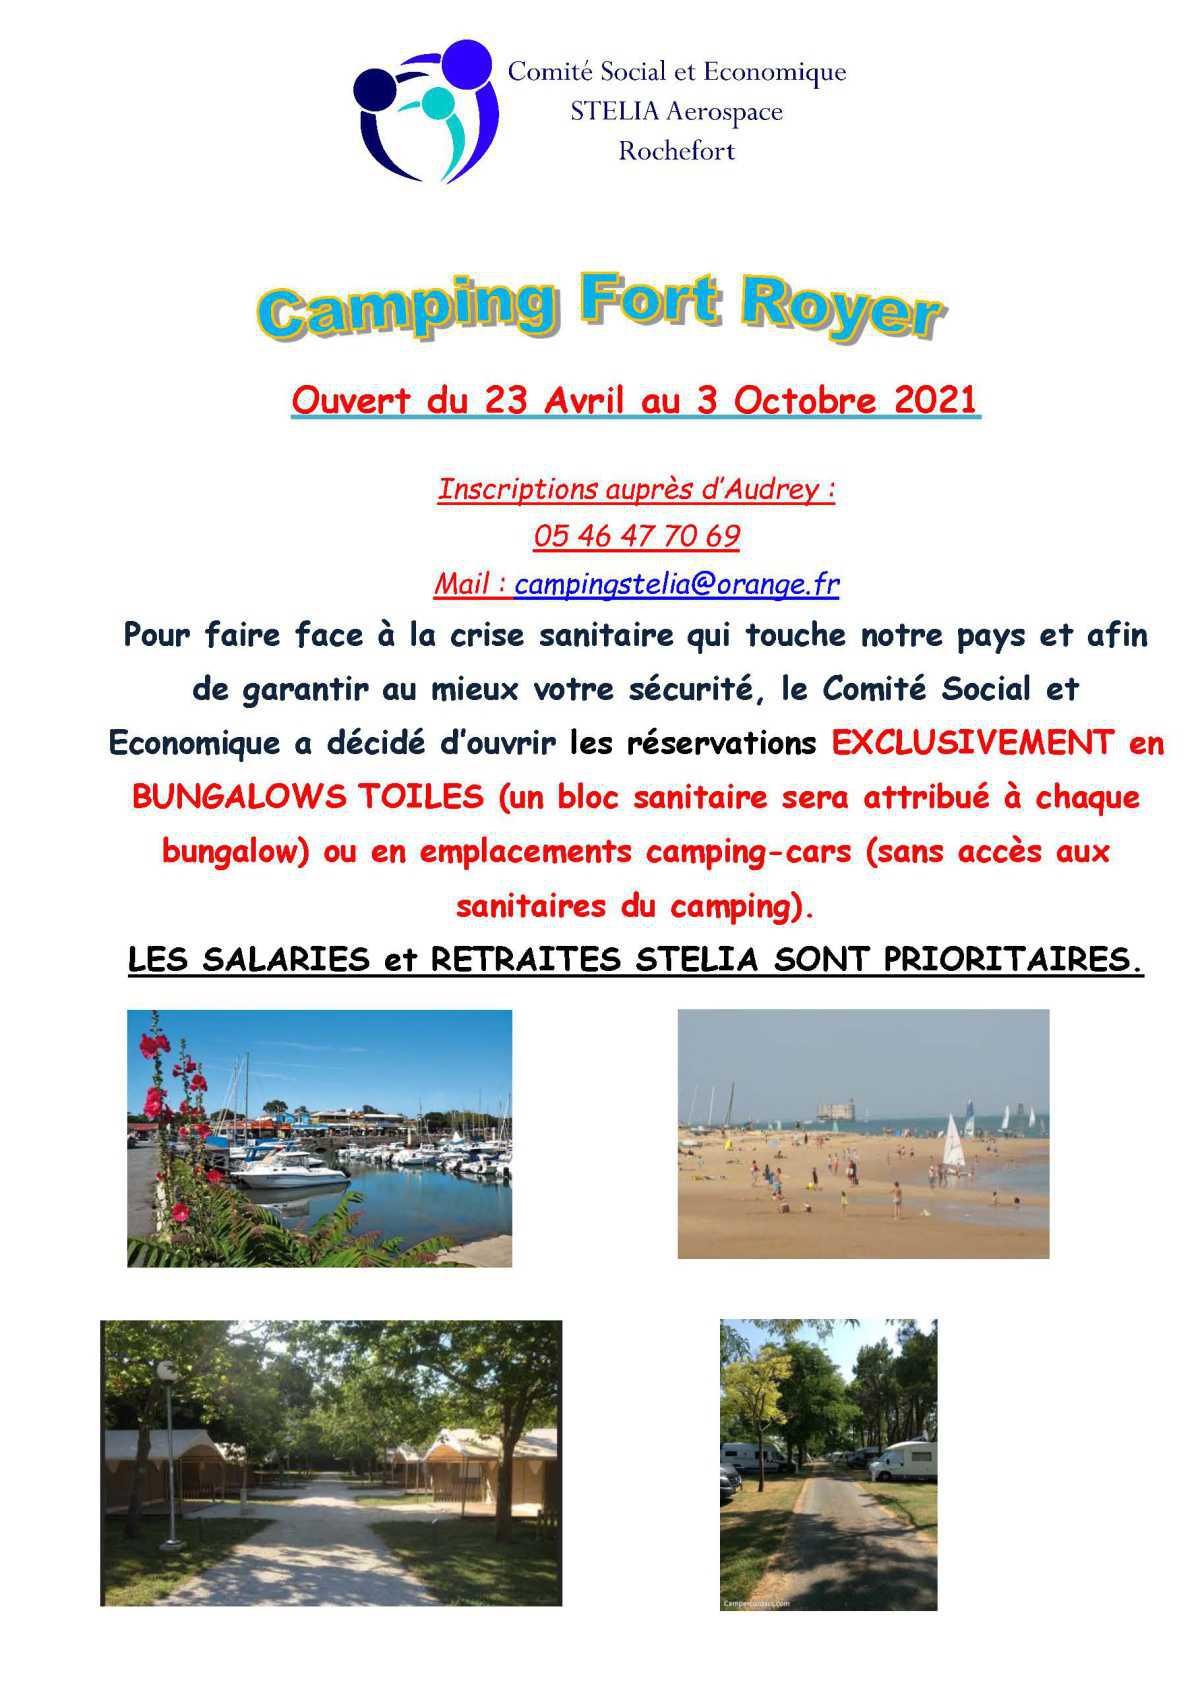 Camping du CSE à Fort-Royer